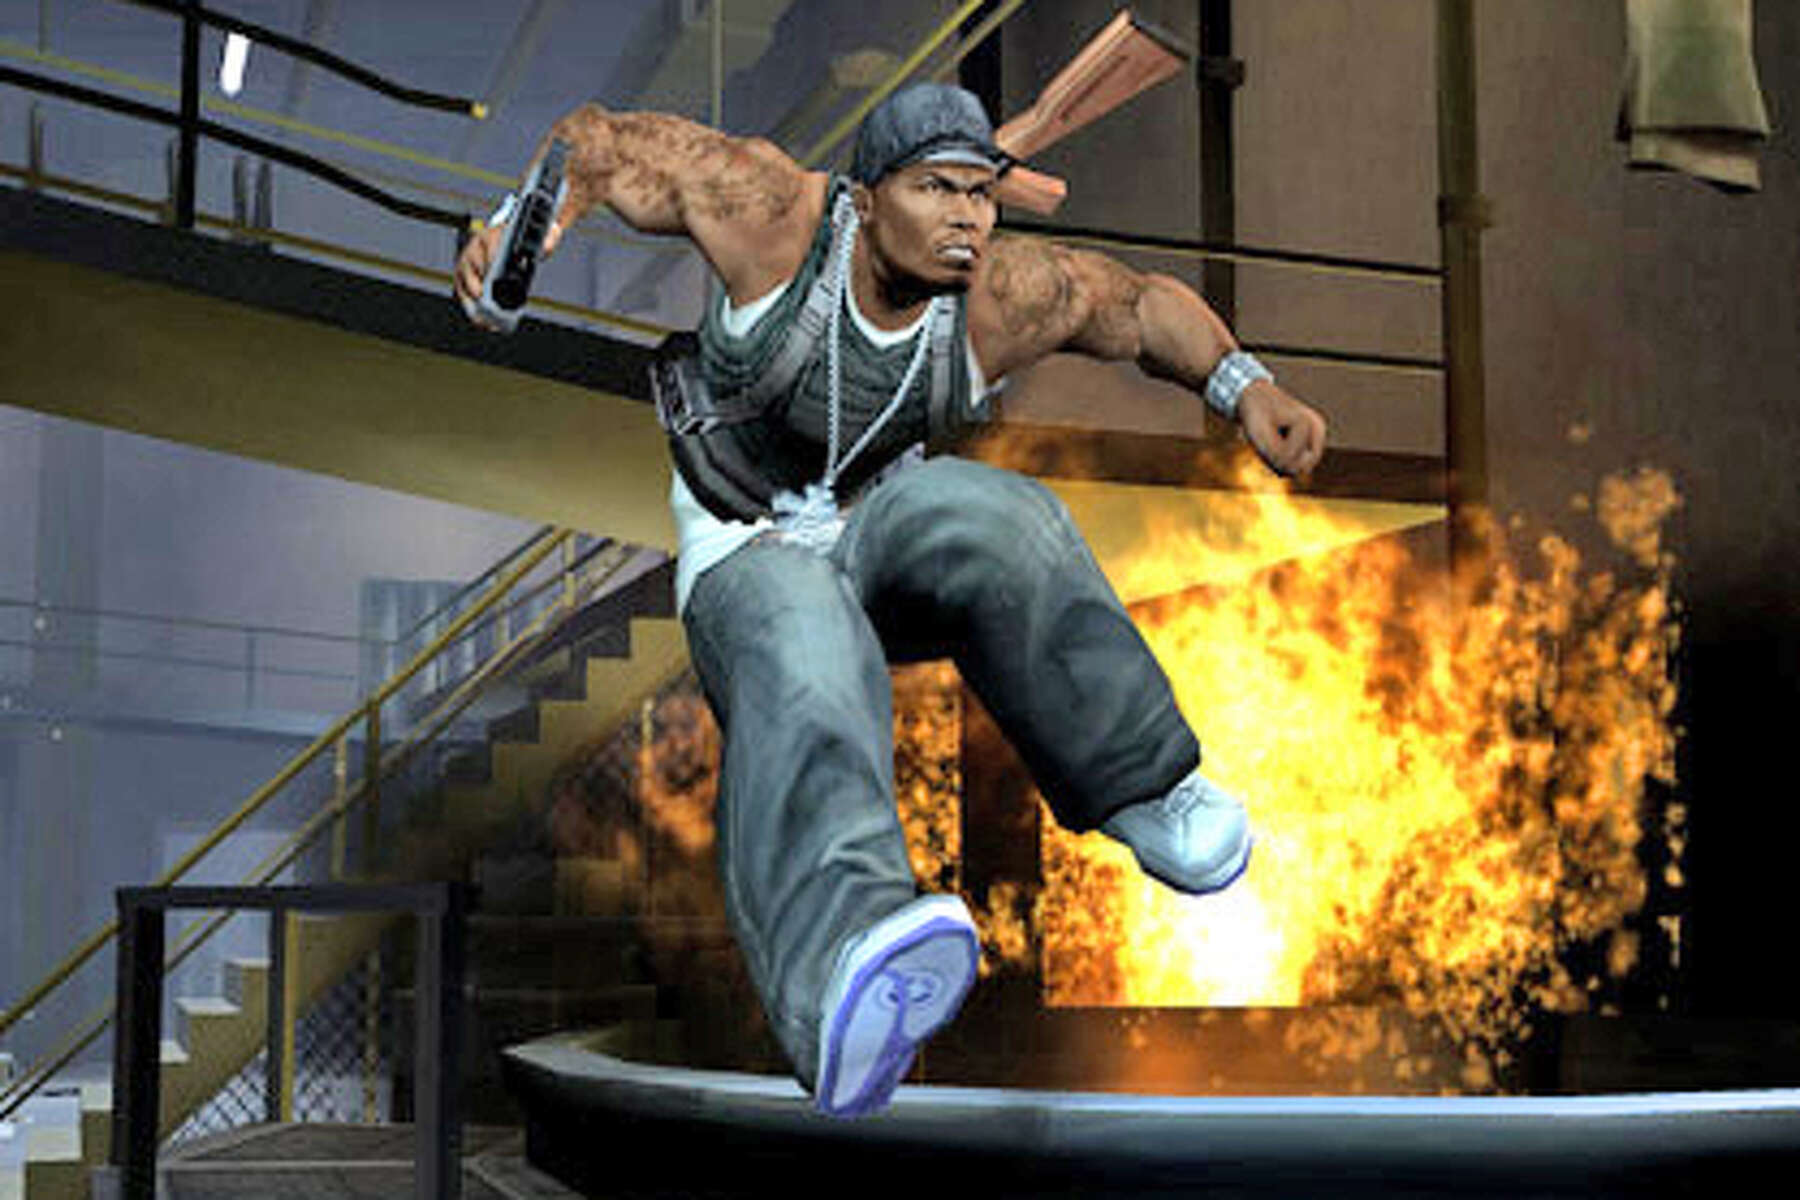 50 Cent: Bulletproof has guns aplenty, but where's the fun if you